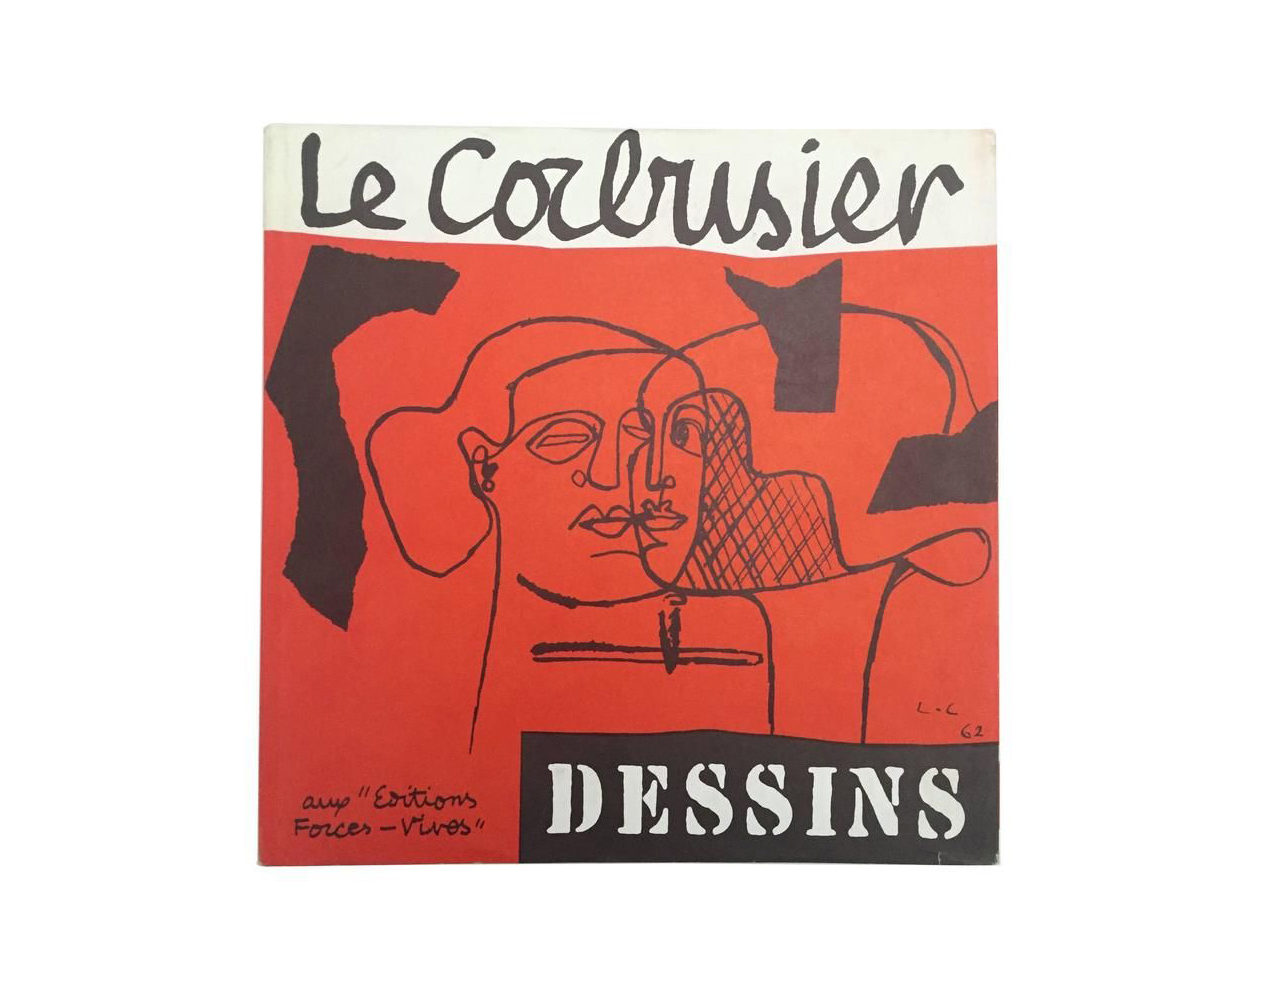 The Spaces Xmas gift guide - Le Corbusier's Suite de Dessins first edition